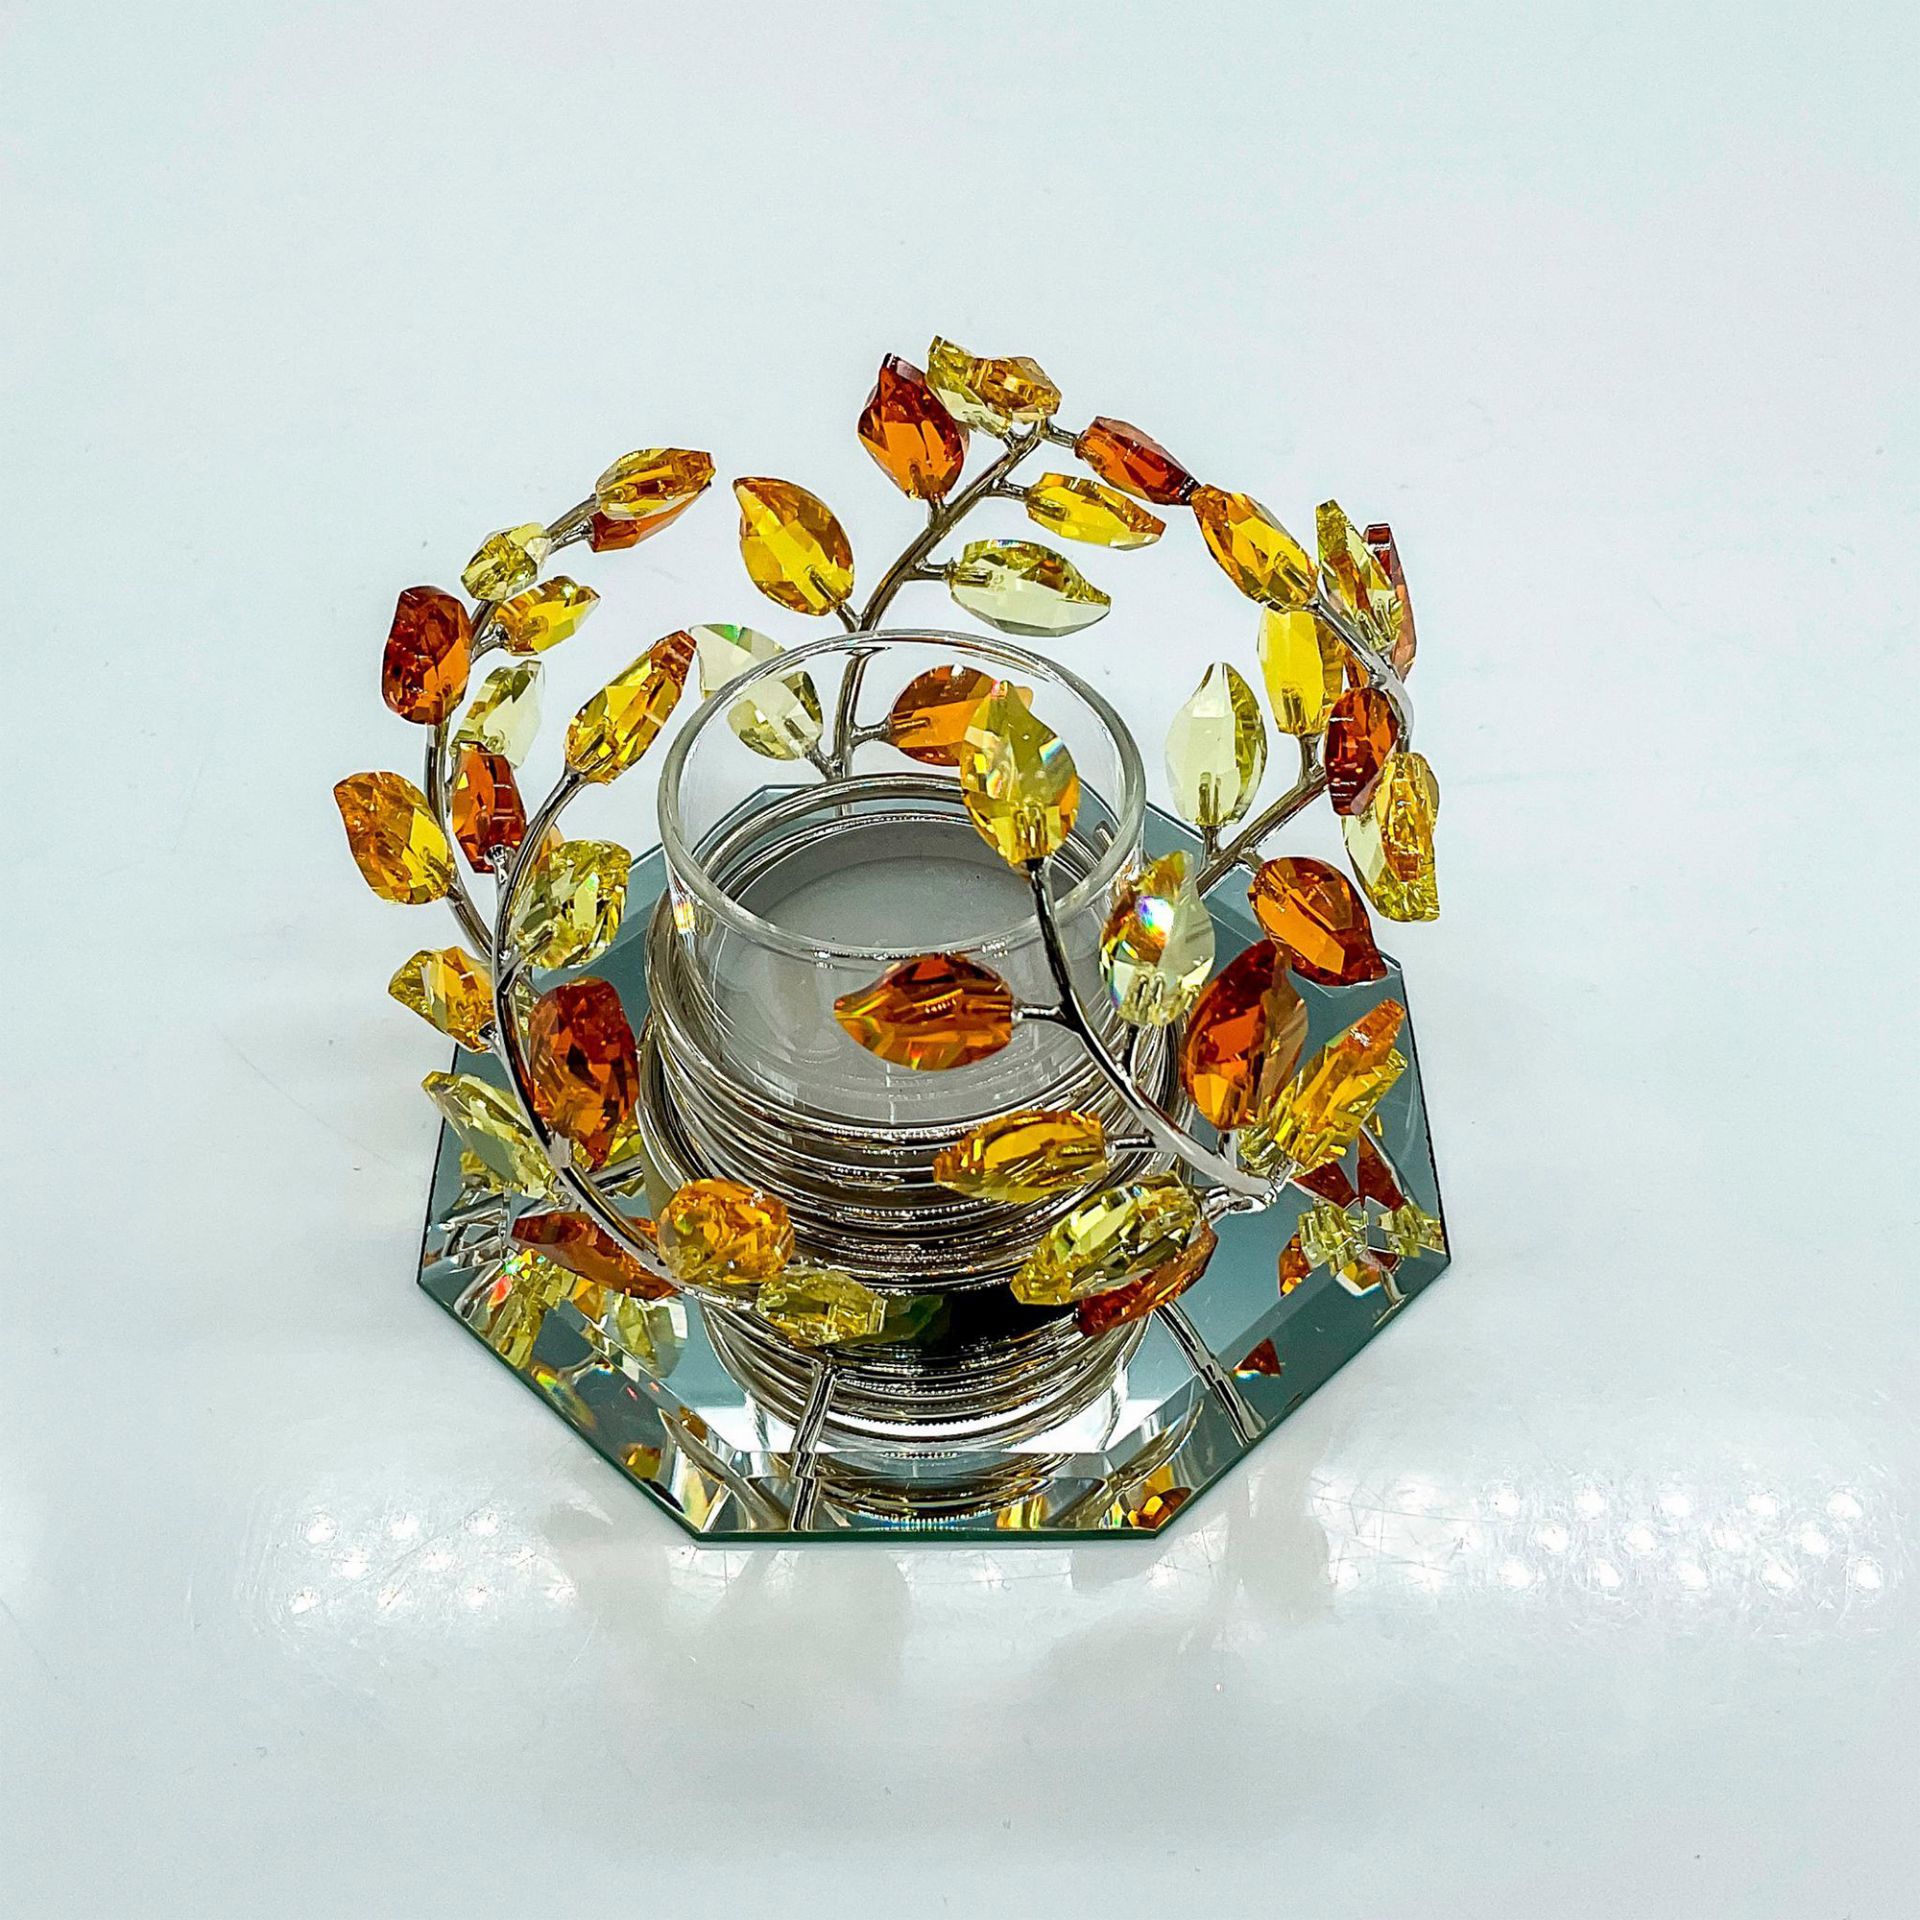 Swarovski Crystal Candle Holder, Autumn Leaves - Image 2 of 4